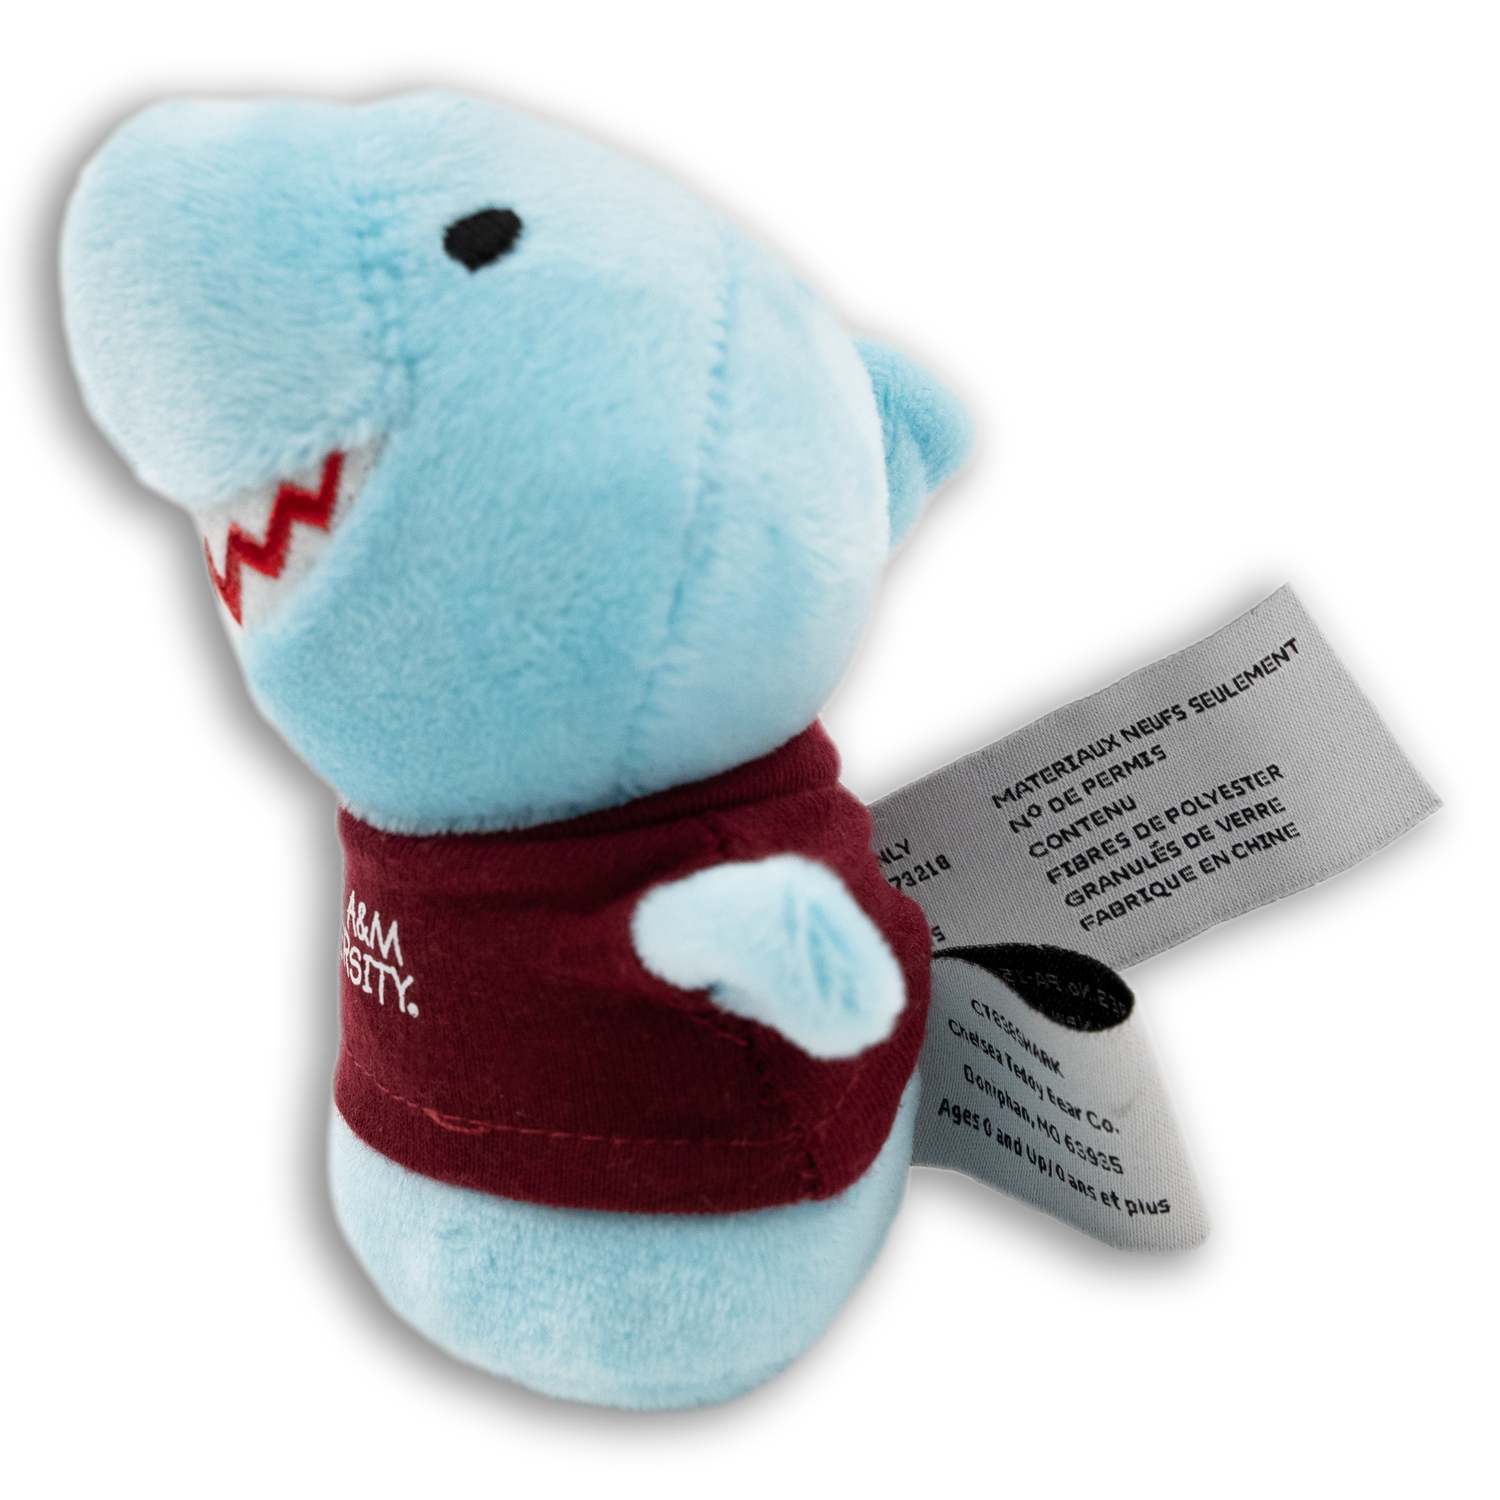 Texas A&M University Smiley Blue Shark Shorties Plush Toy